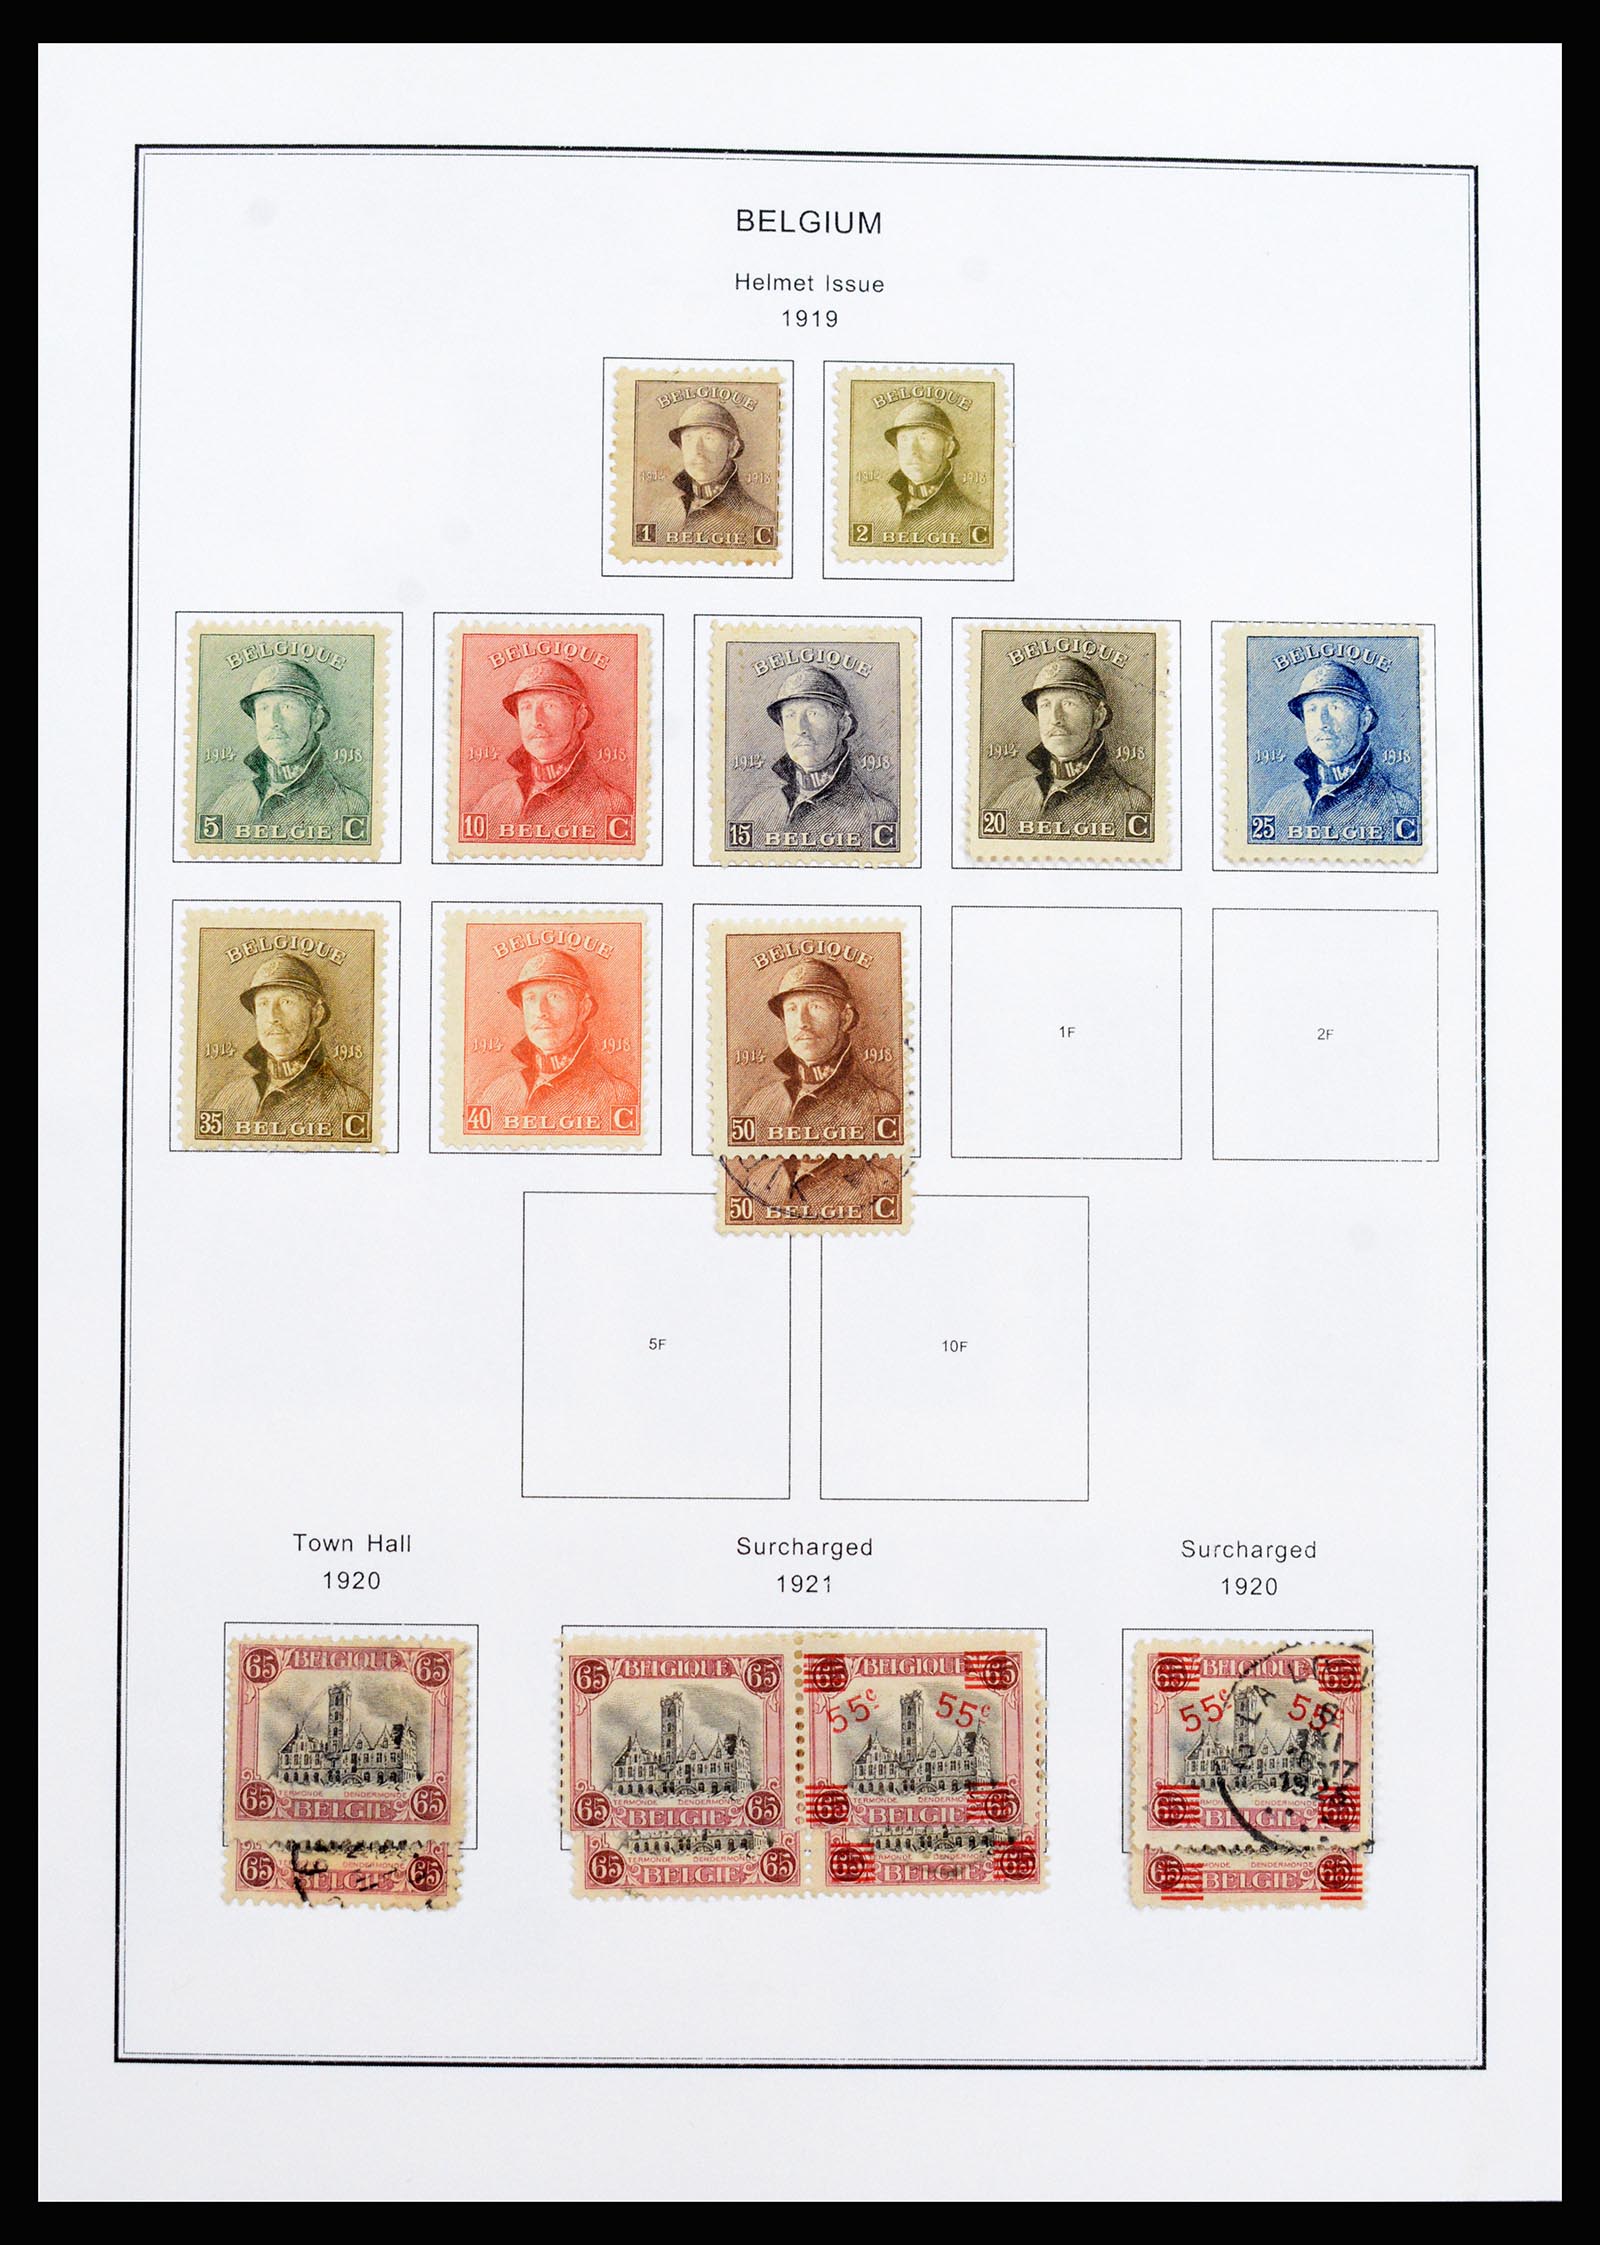 37240 014 - Stamp collection 37240 Belgium 1849-1996.